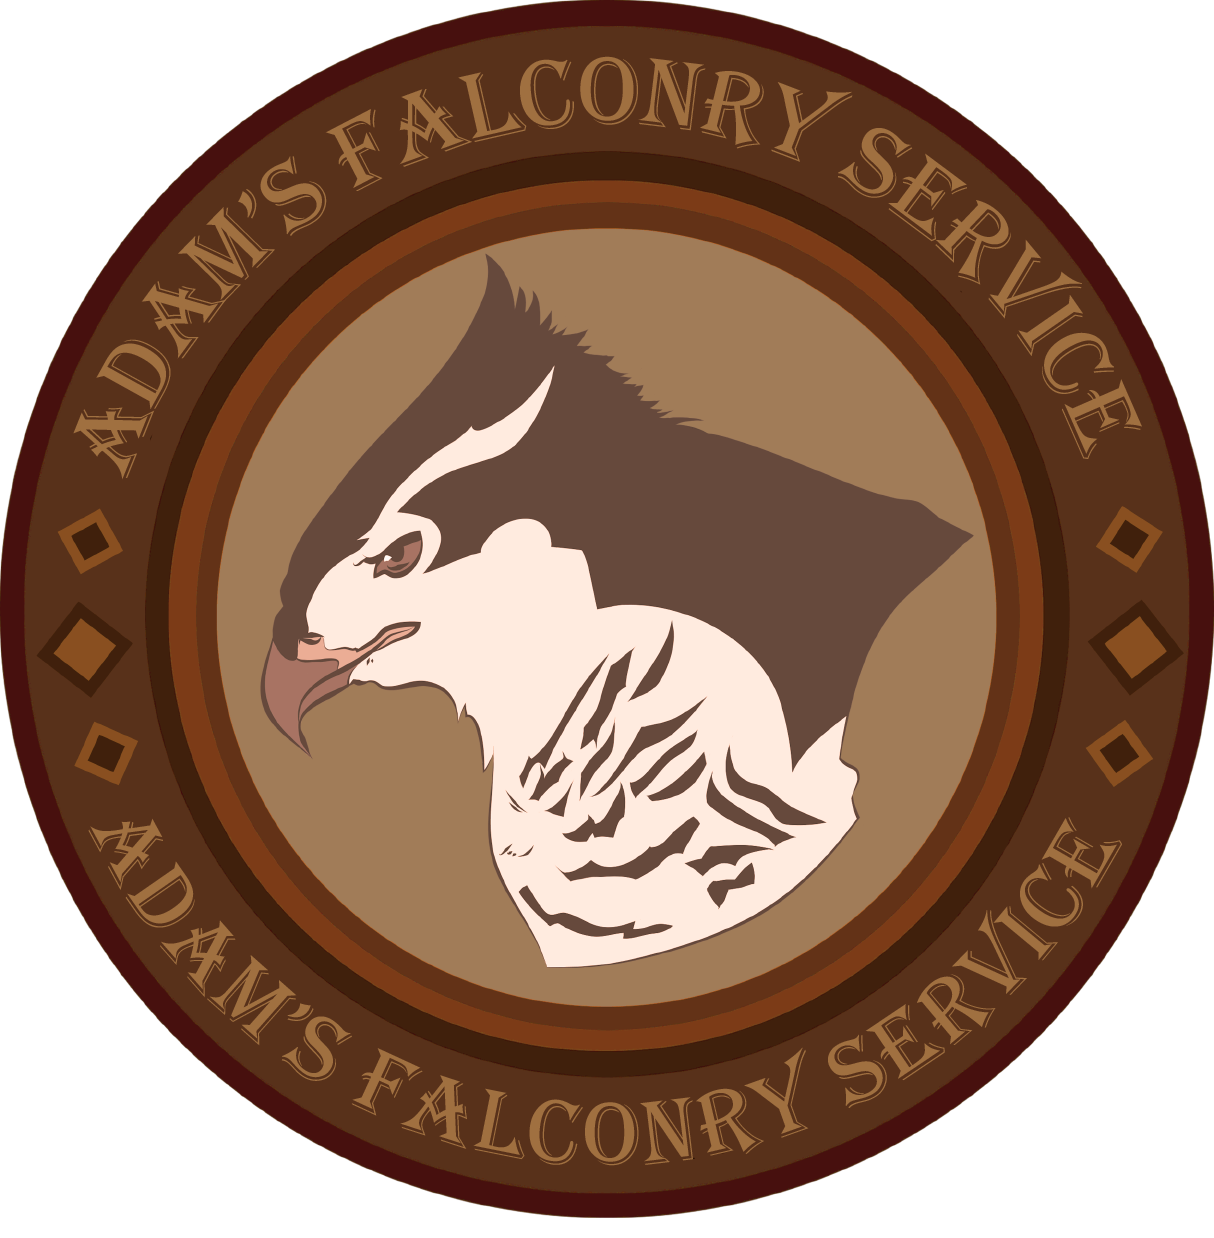 Adams Falconry Service